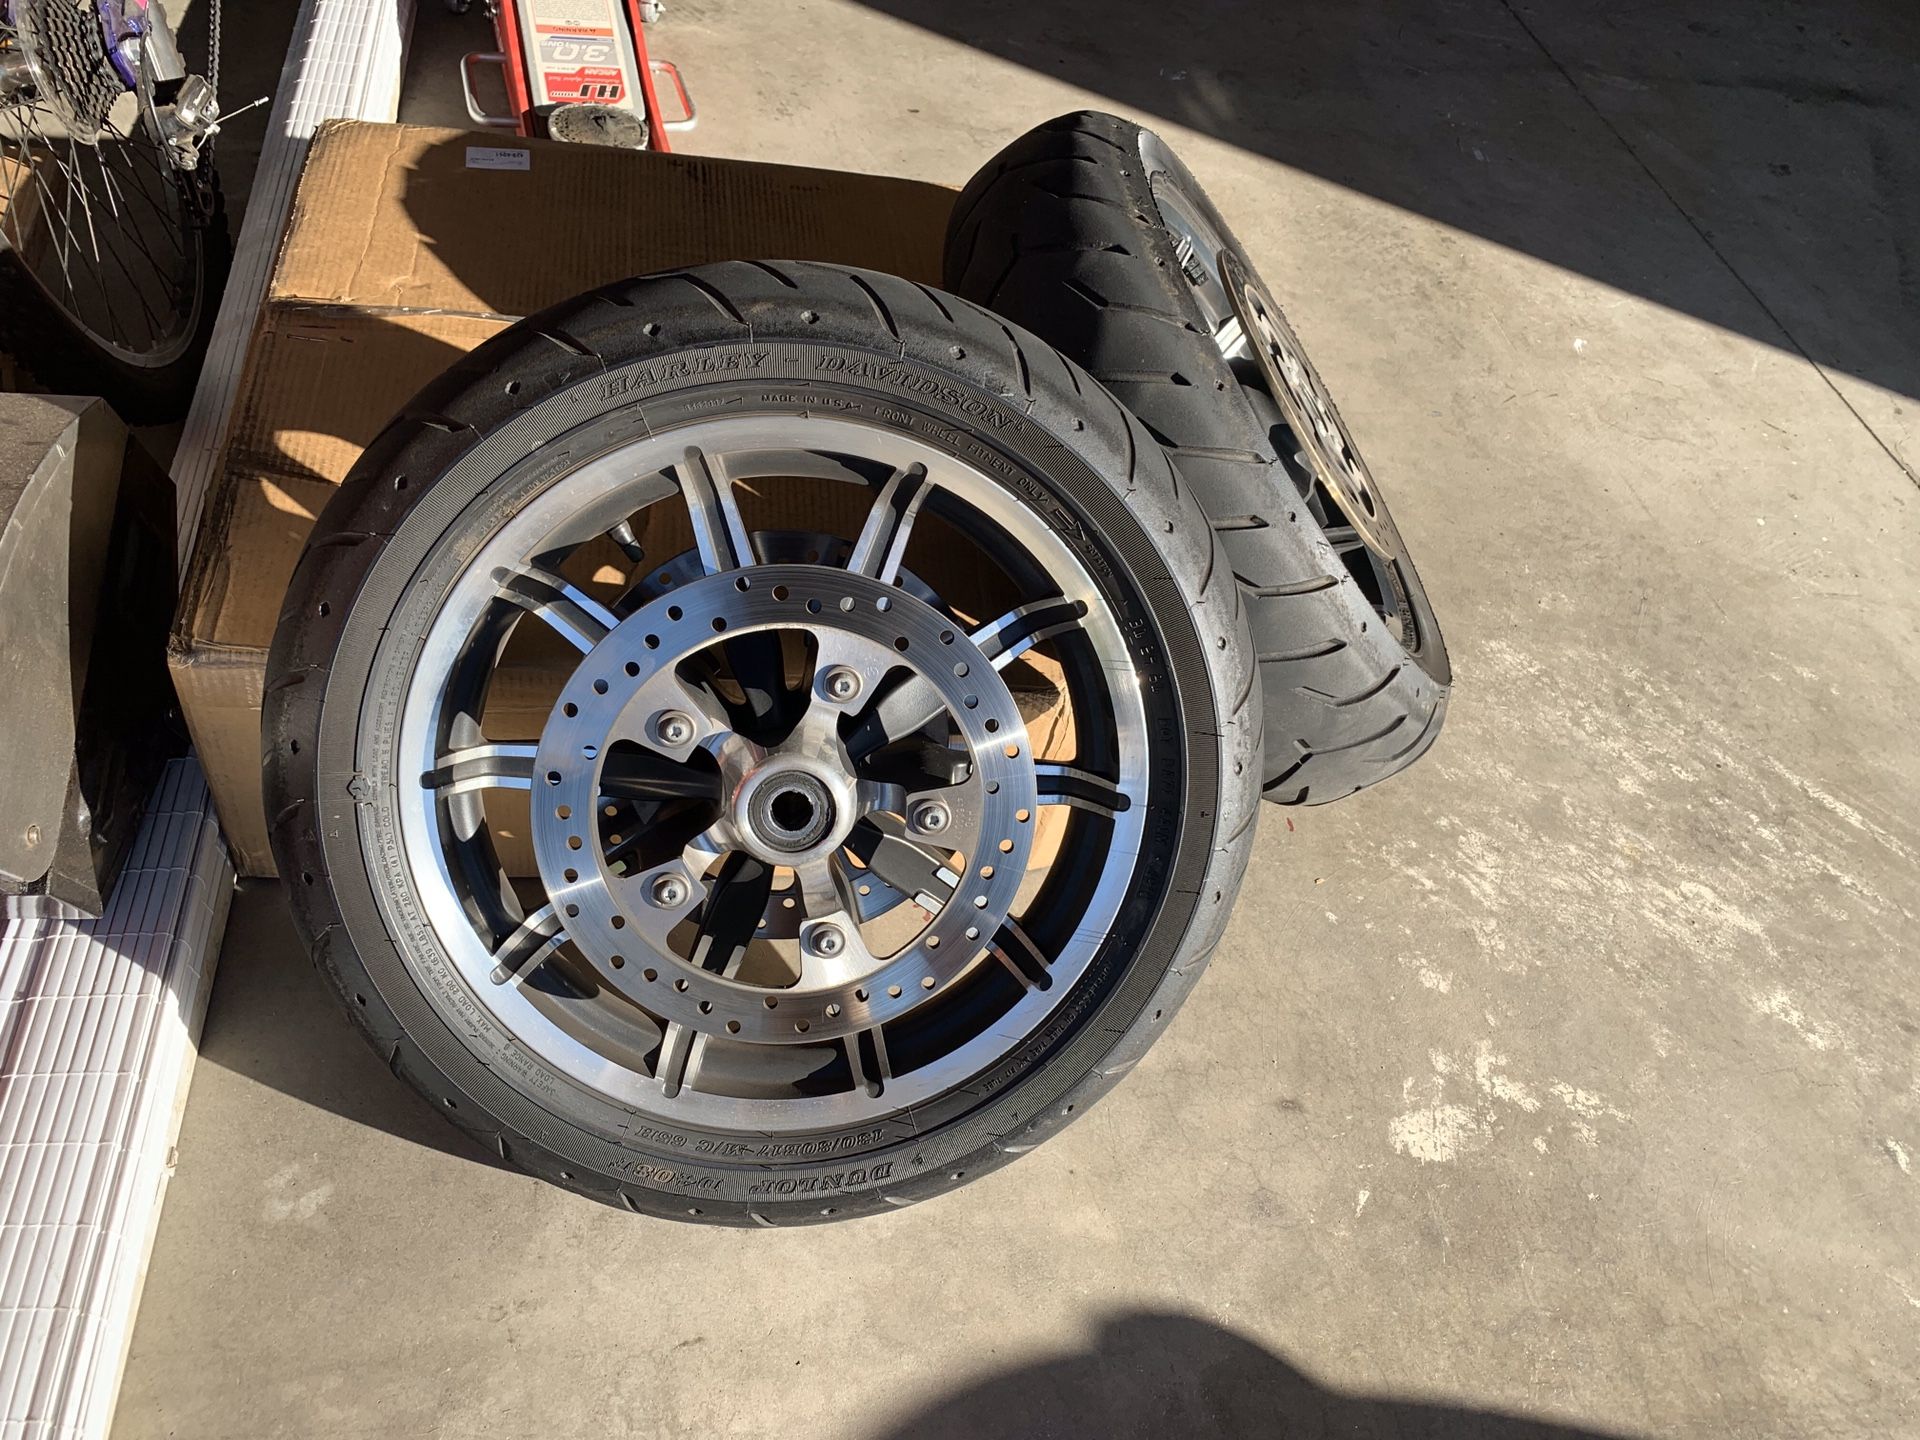 Harley Davidson wheels and tires